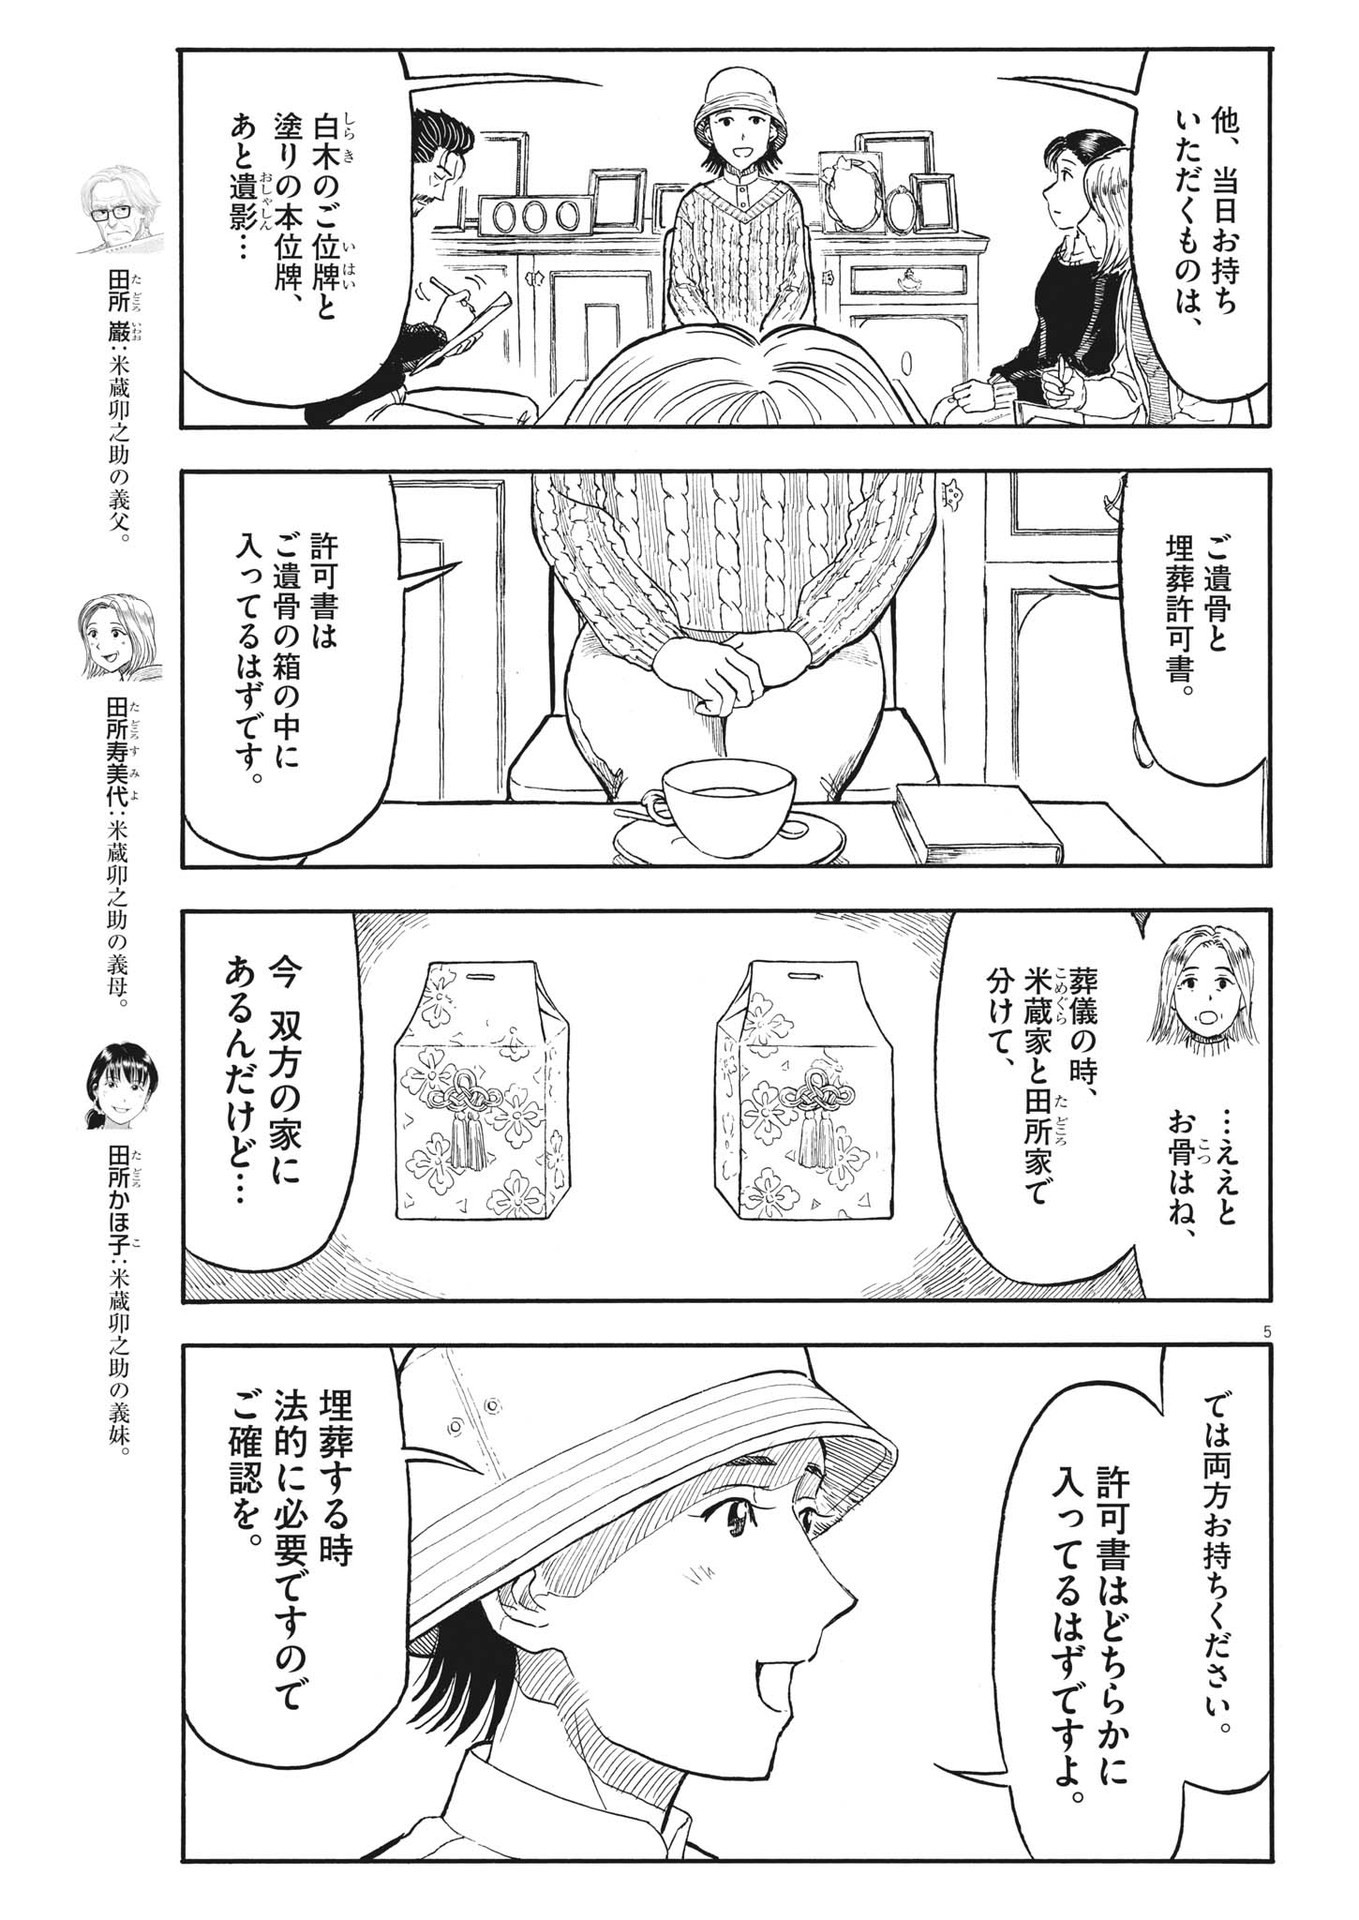 Komegura Fuufu no Recipe-chou - Chapter 28 - Page 5